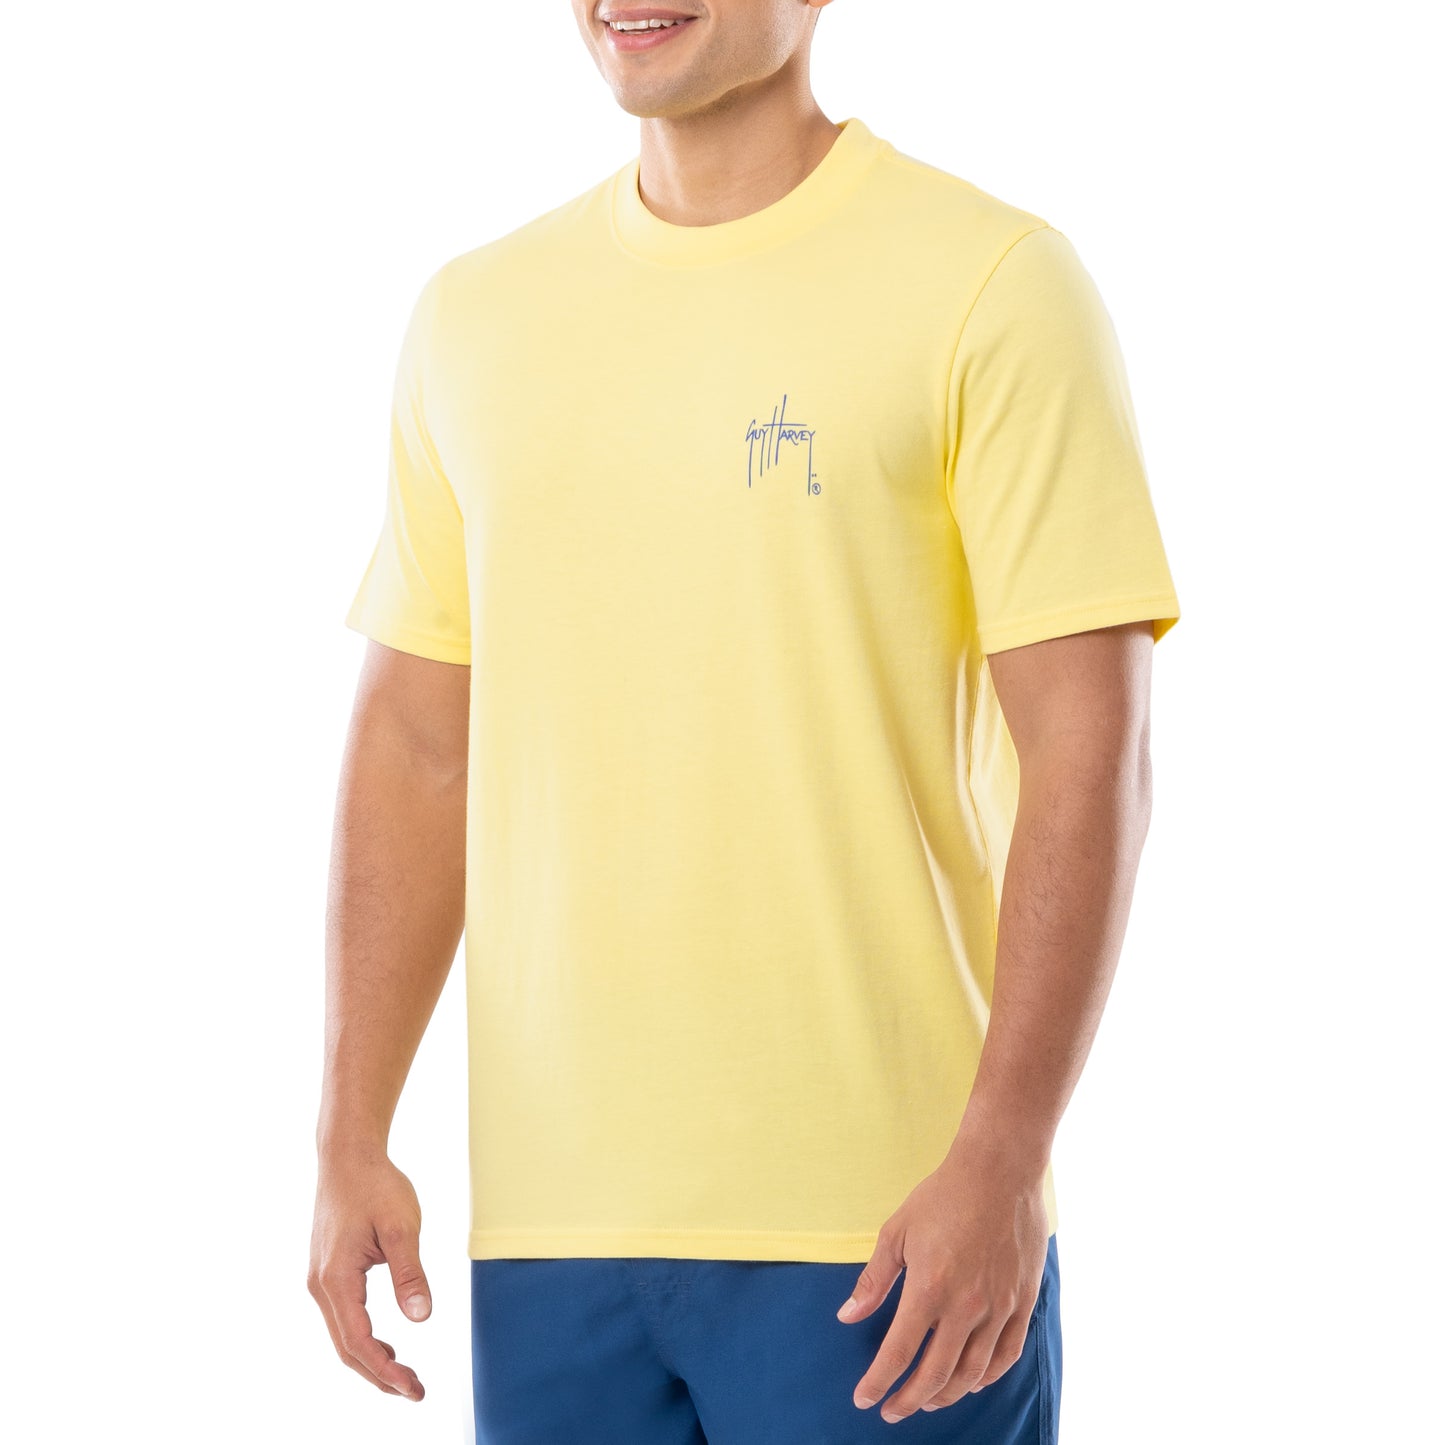 Men's Offshore Sail Short Sleeve T-Shirt View 4